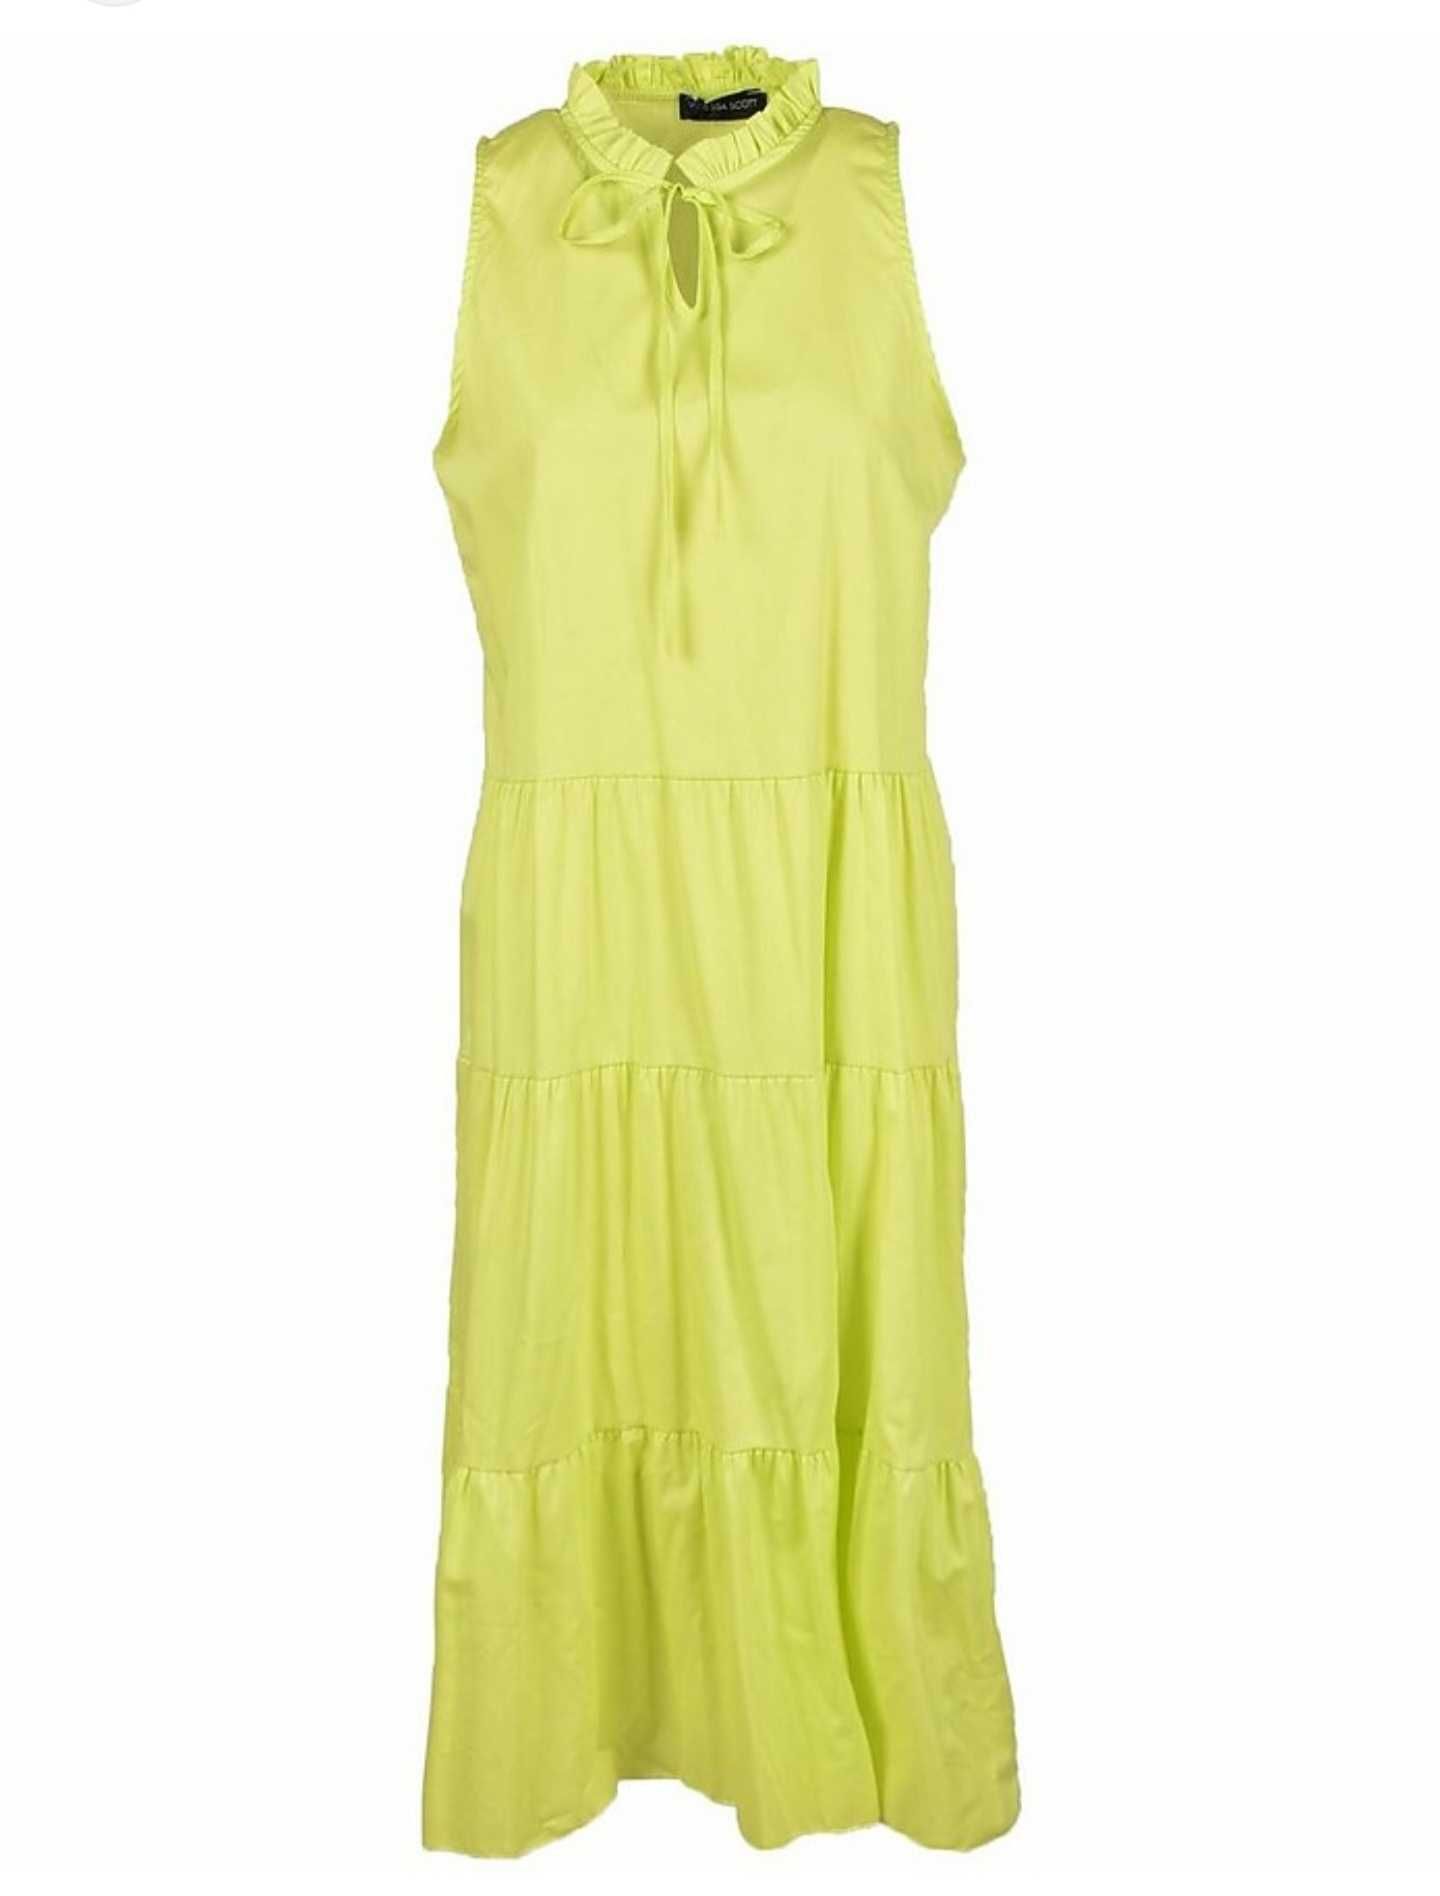 Długa sukienka limonkowa